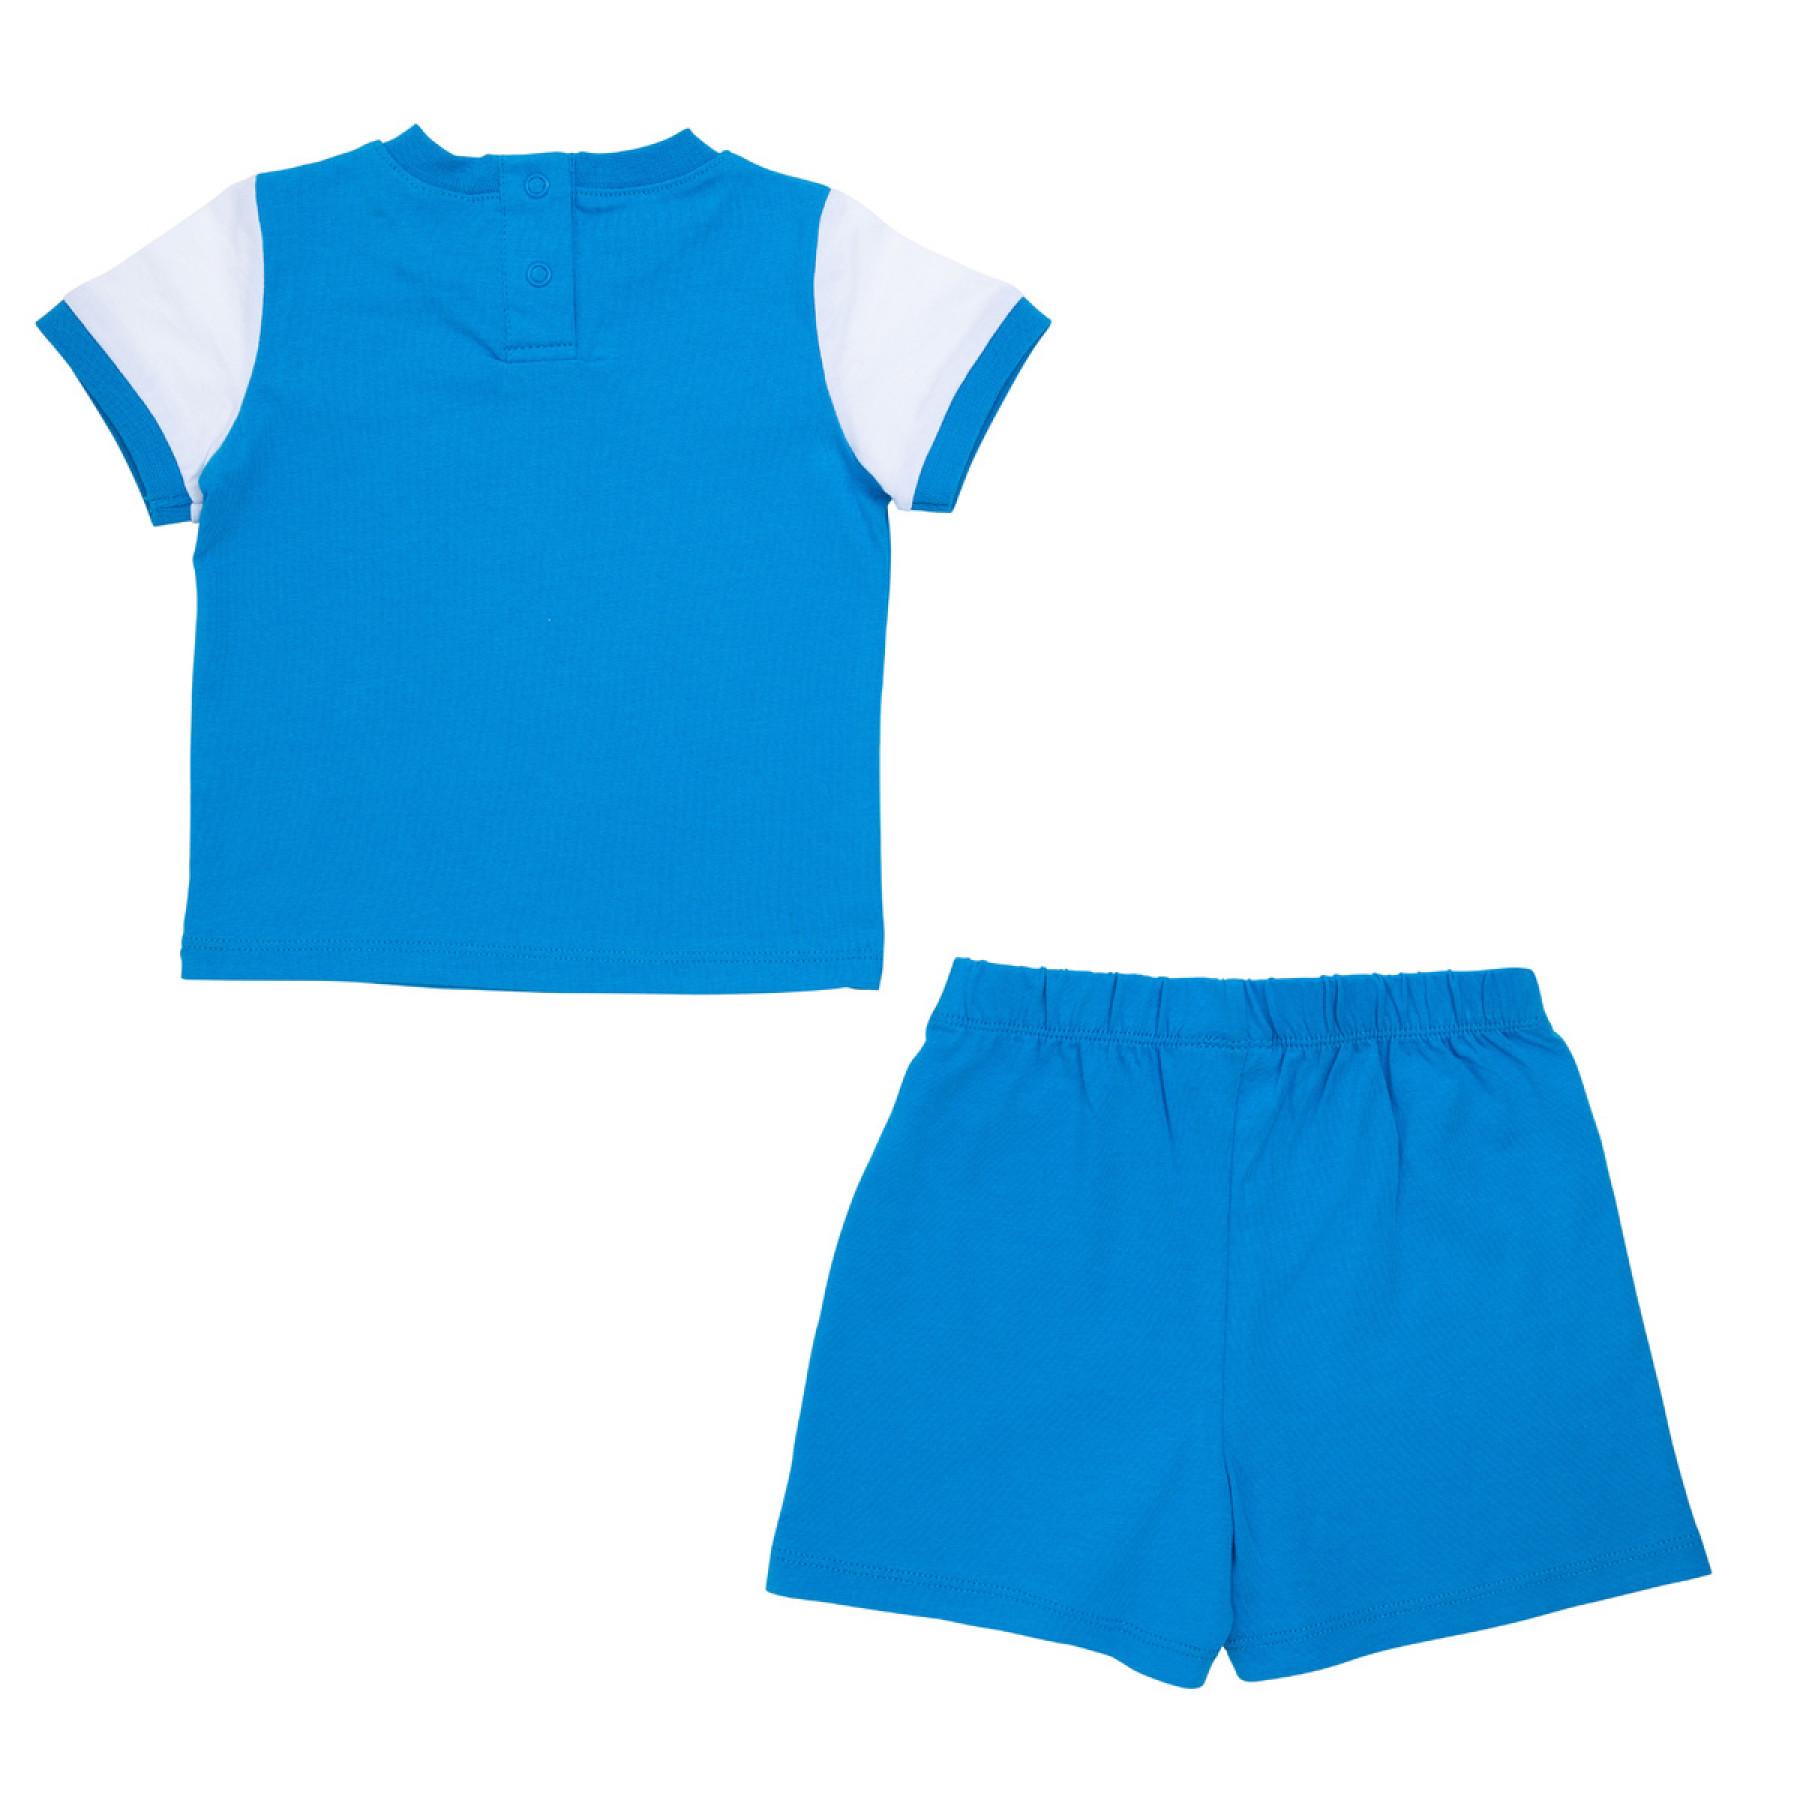 Mini Kit bebé Olympique de Marseille Weeplay